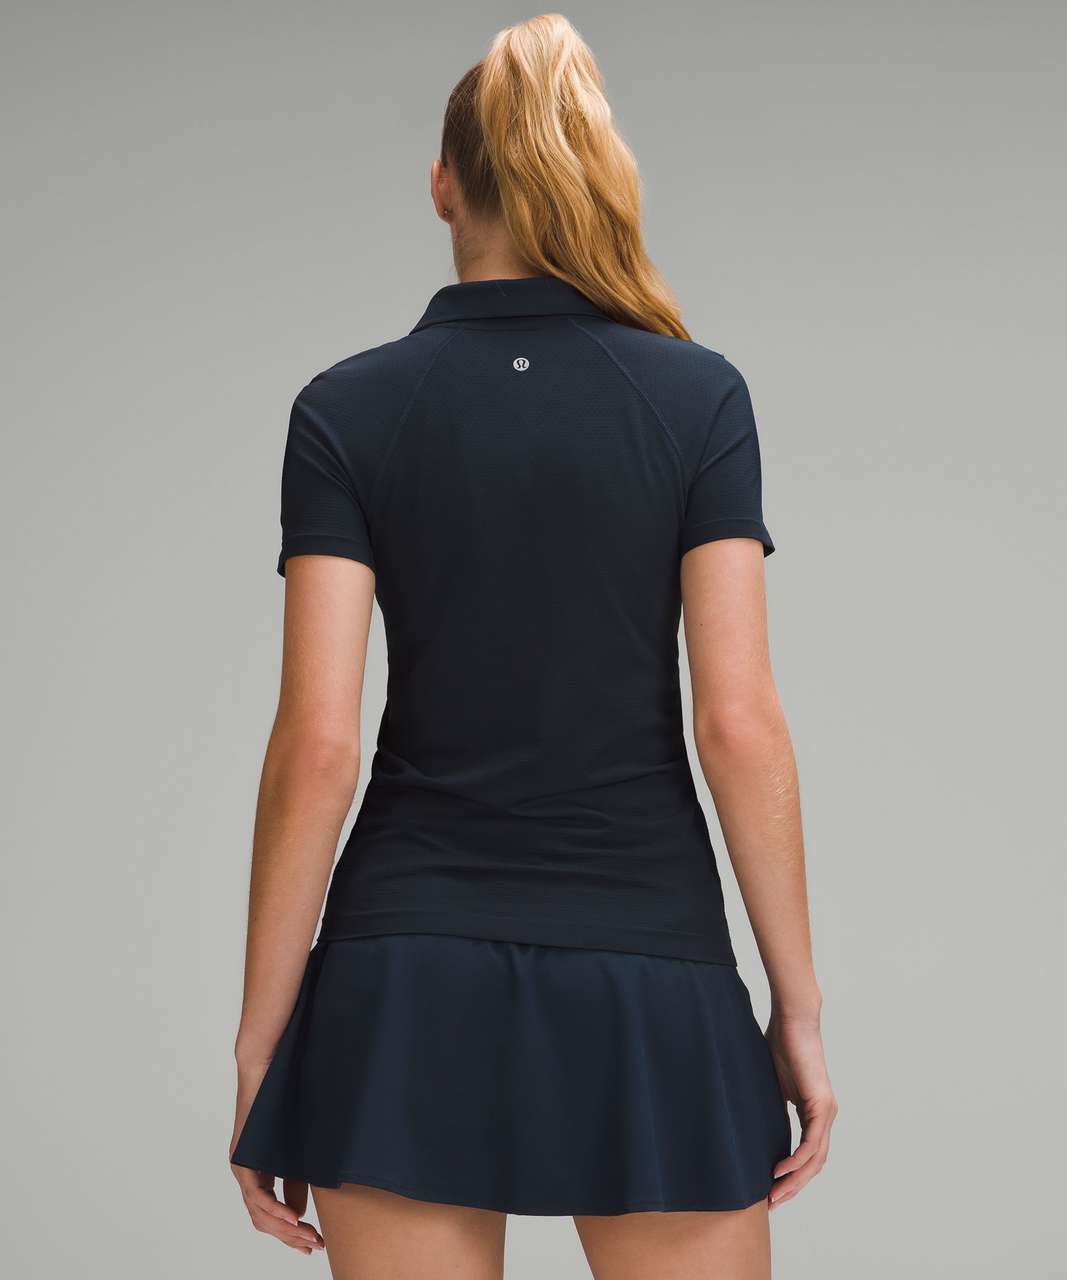 Lululemon Swiftly Tech Short-Sleeve Polo Shirt - True Navy / True Navy